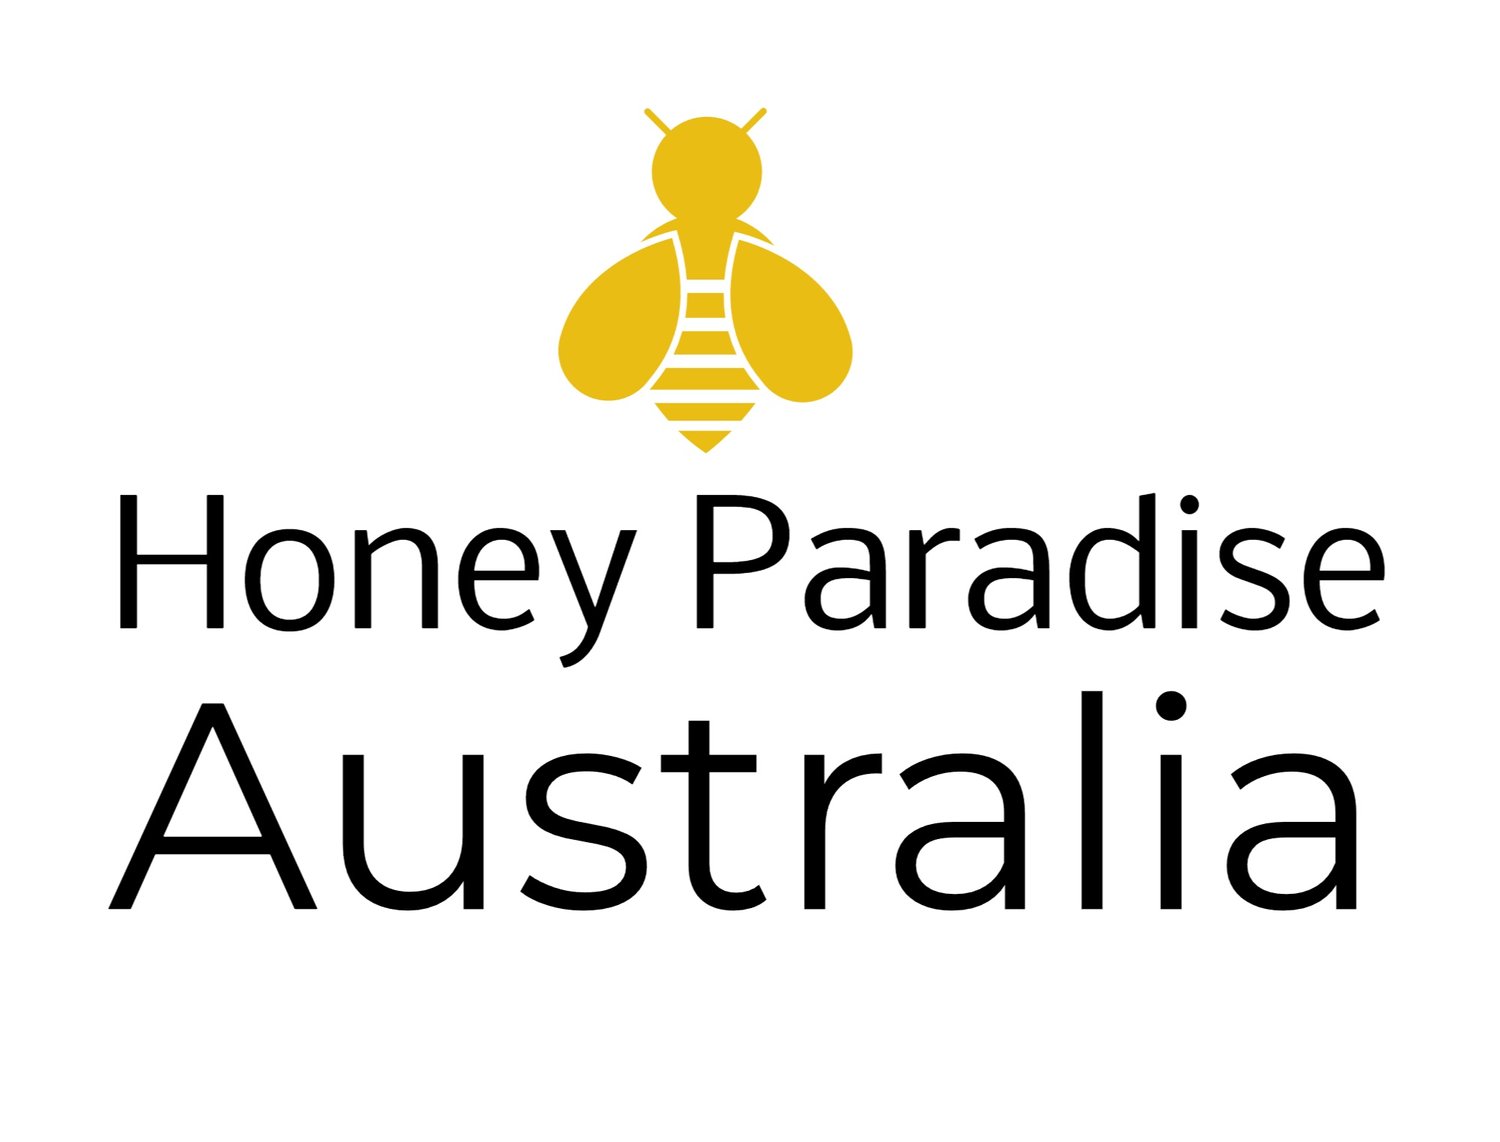  Honey Paradise Australia